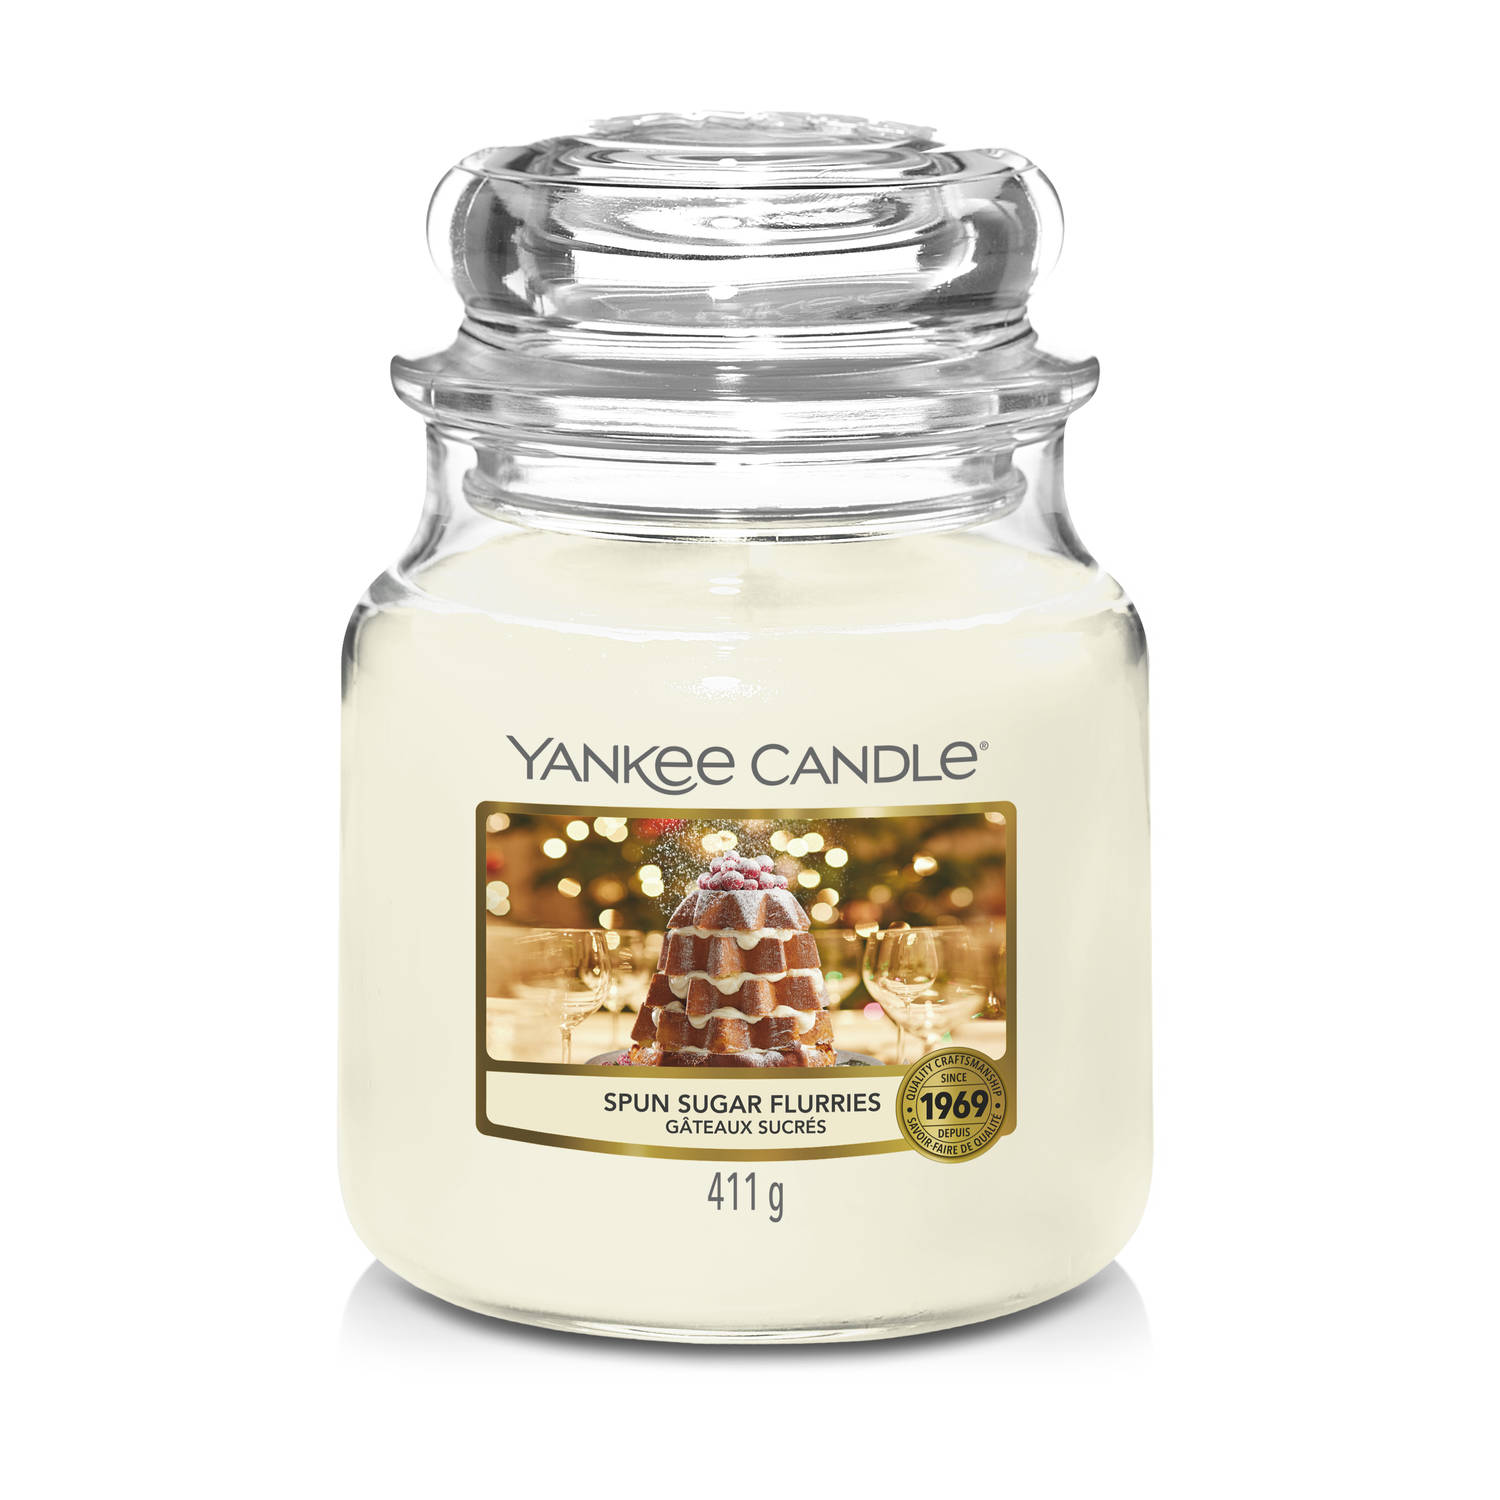 Yankee Candle - Spun Sugar Flurries Medium Jar